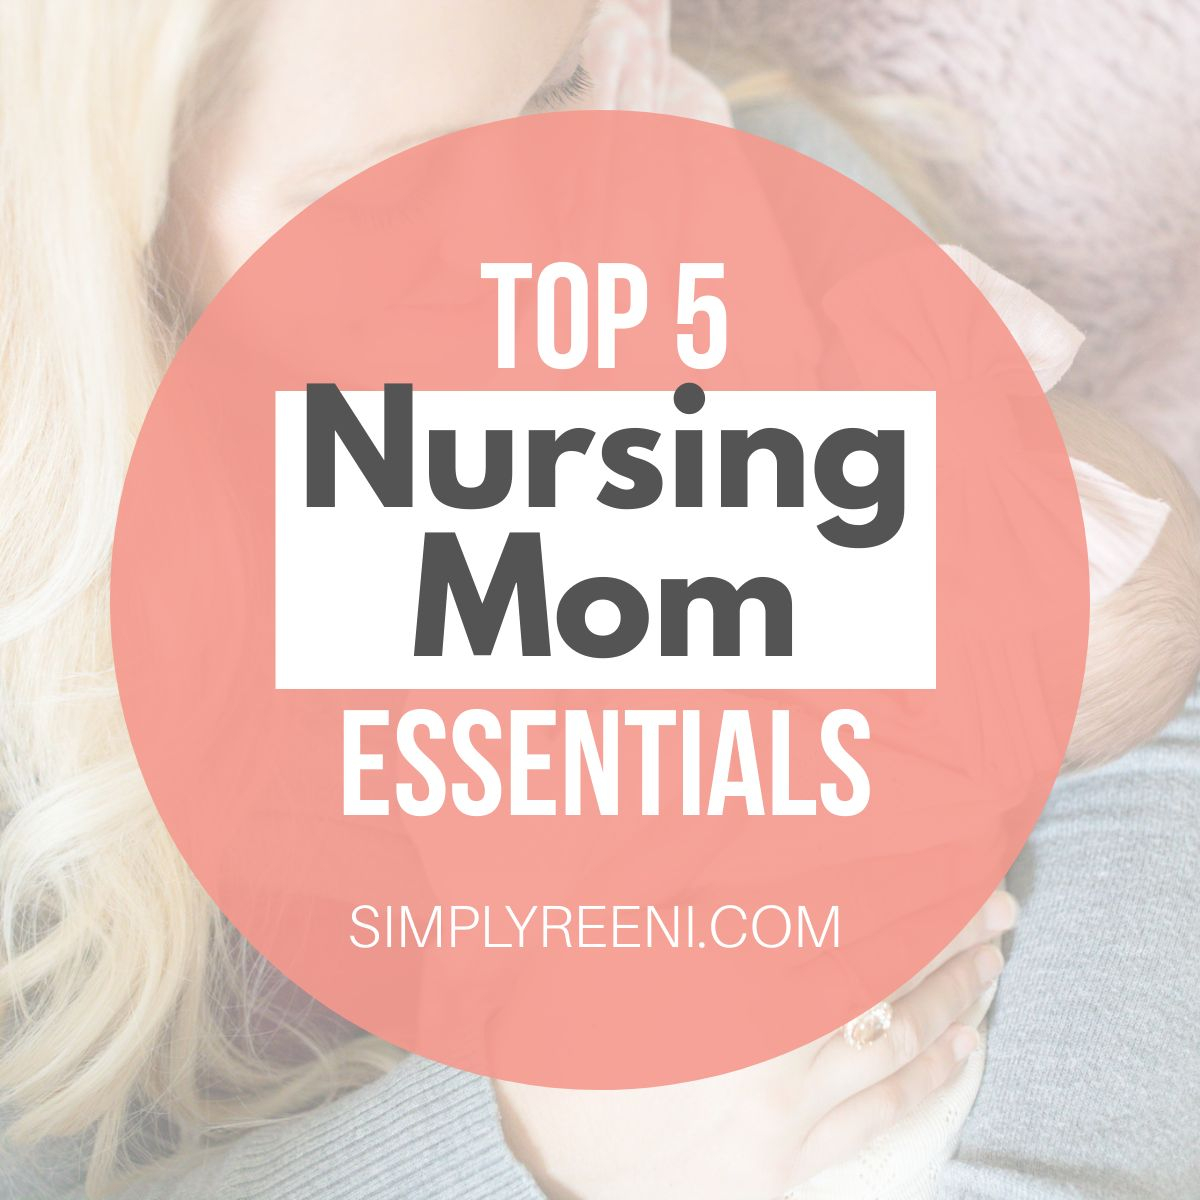 Top 5 Nursing Mom Essentials - Simply Reeni